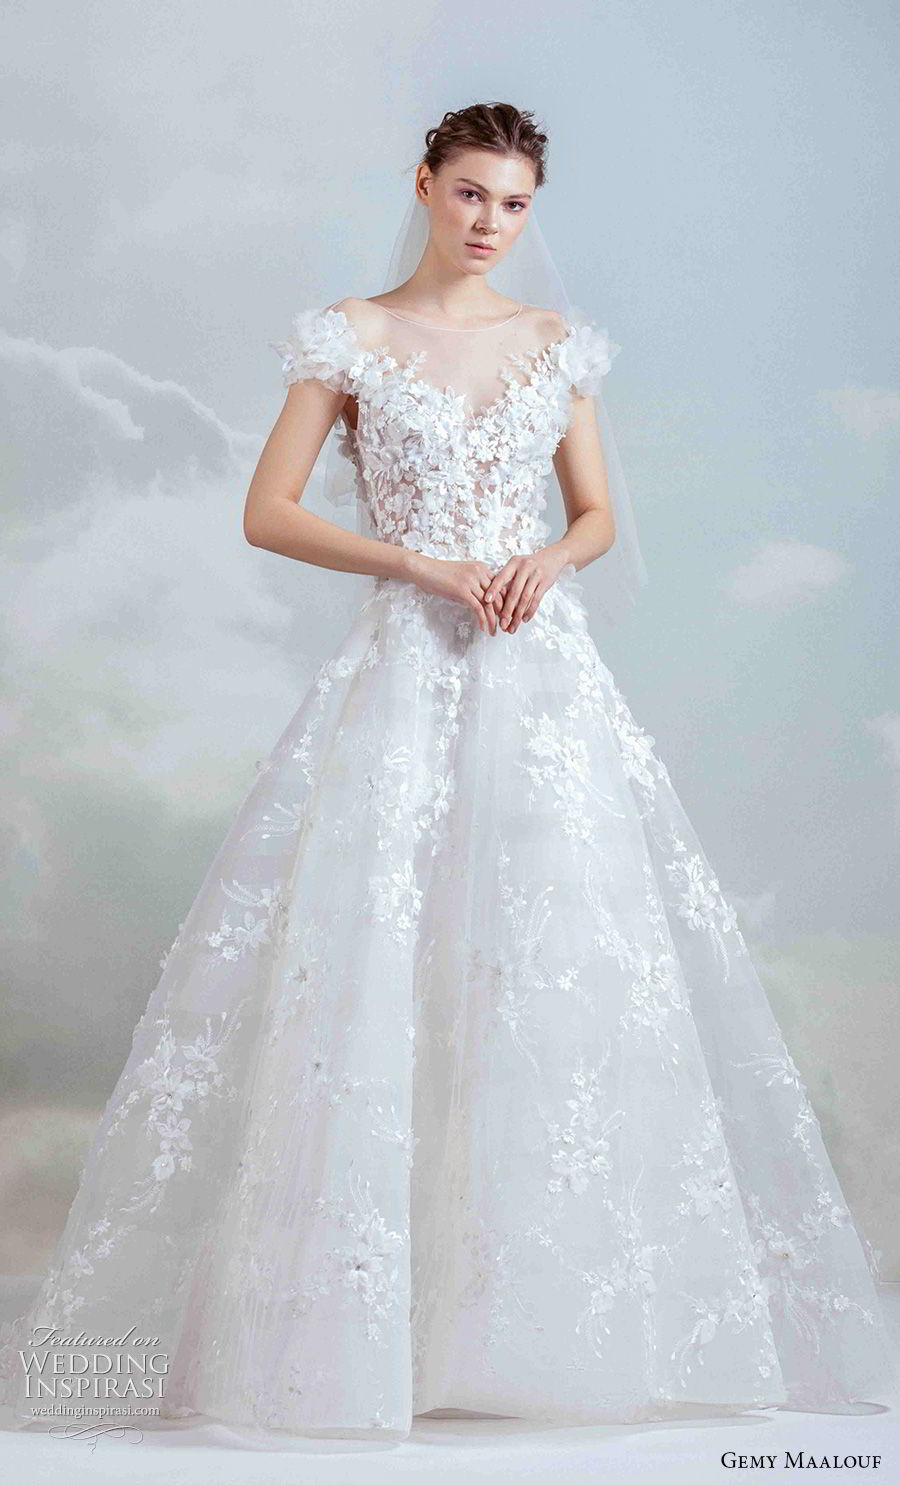 Gemy Maalouf 2019 Wedding Dresses — “The Royal Bride” Bridal Collection ...